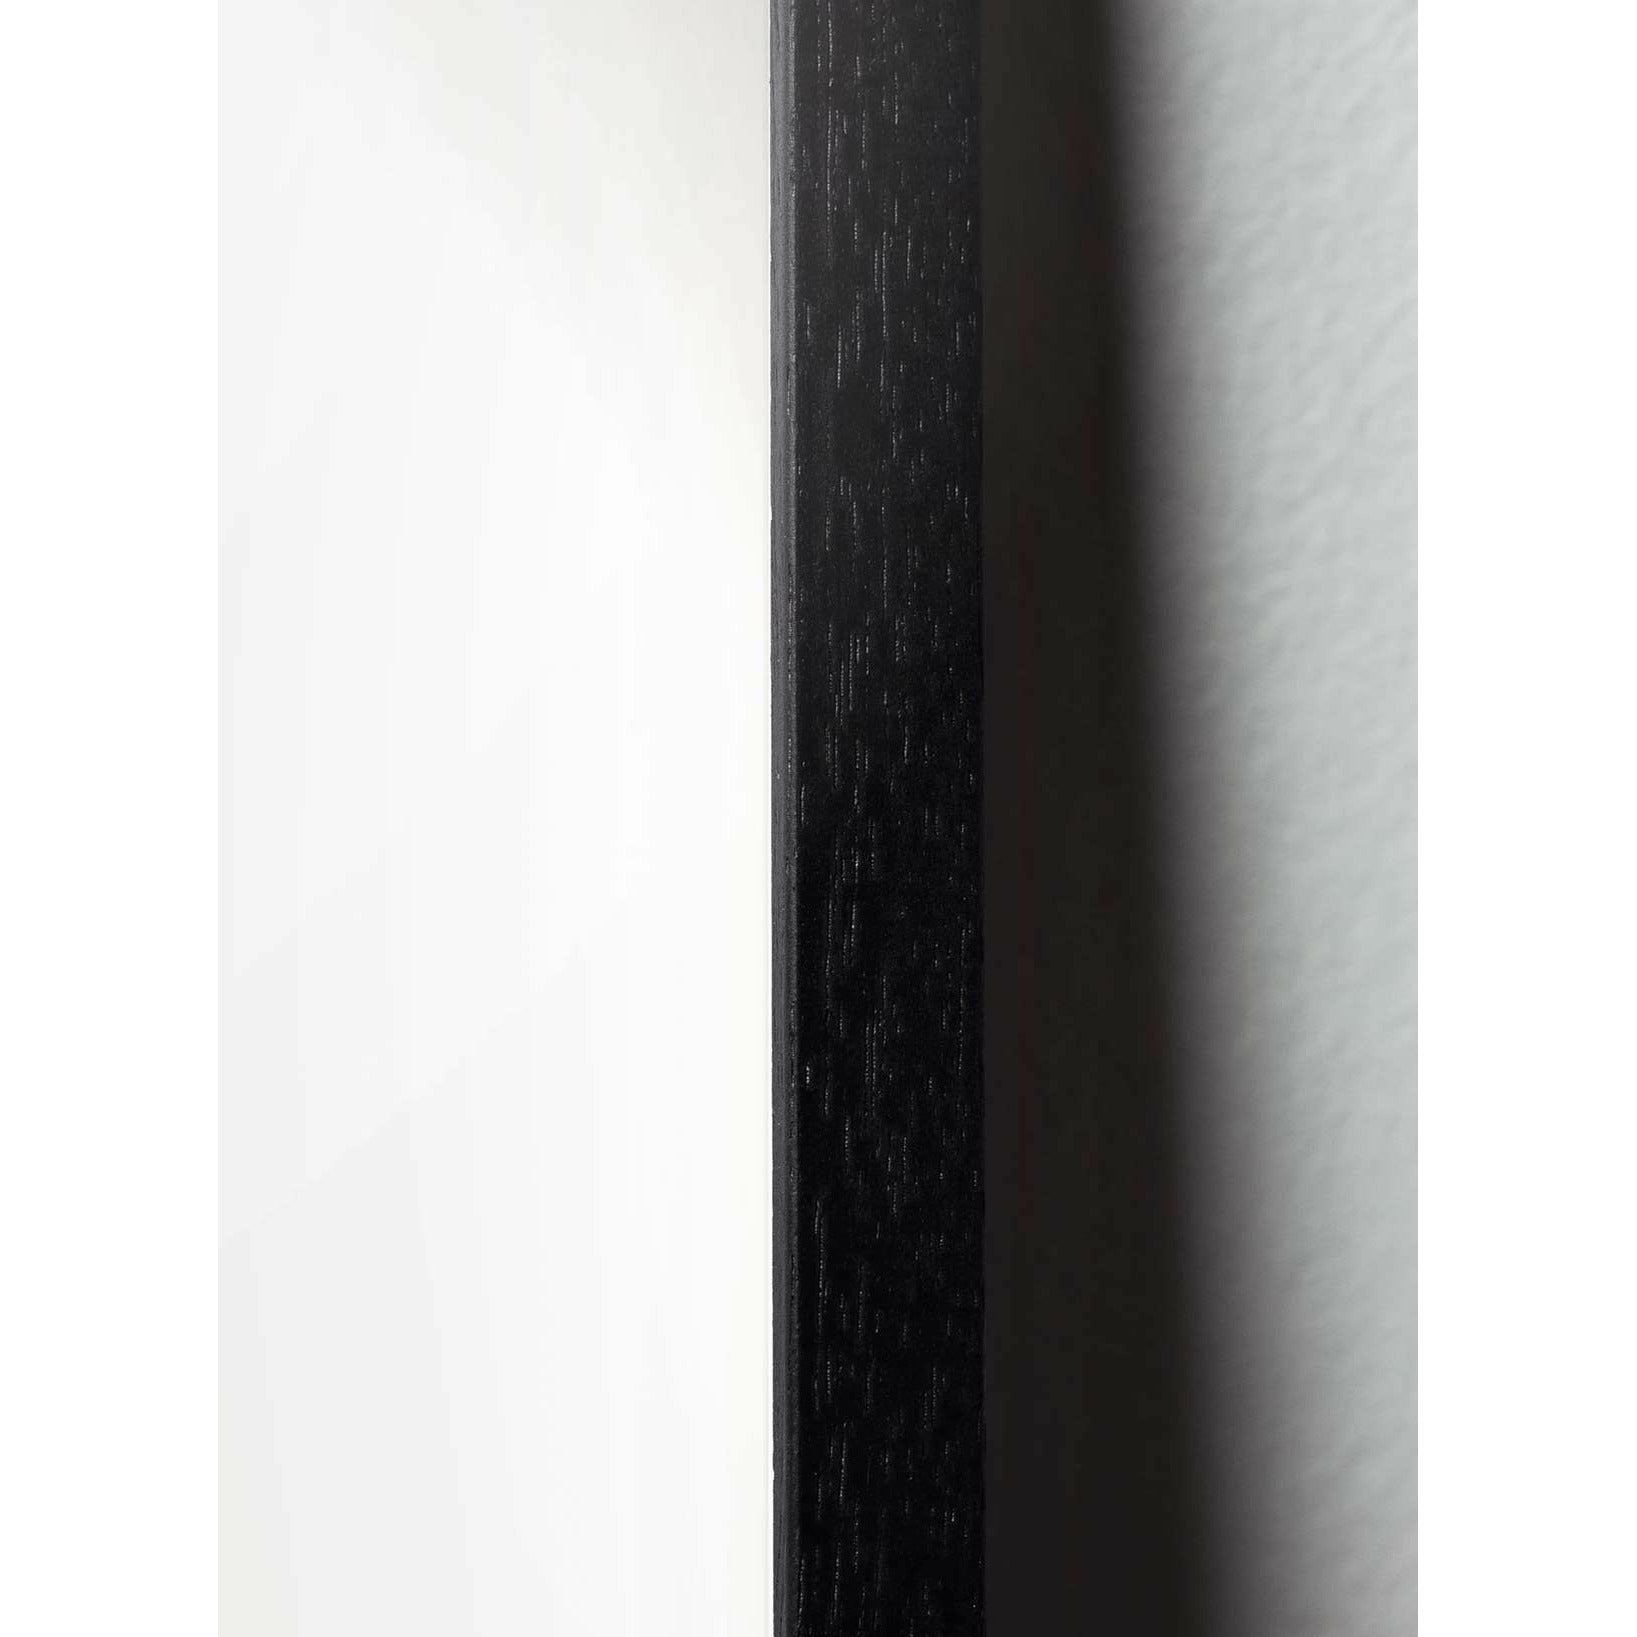 Brainchild Flowerpot Classic Poster, Frame In Black Lacquered Wood 50x70 Cm, Black Background